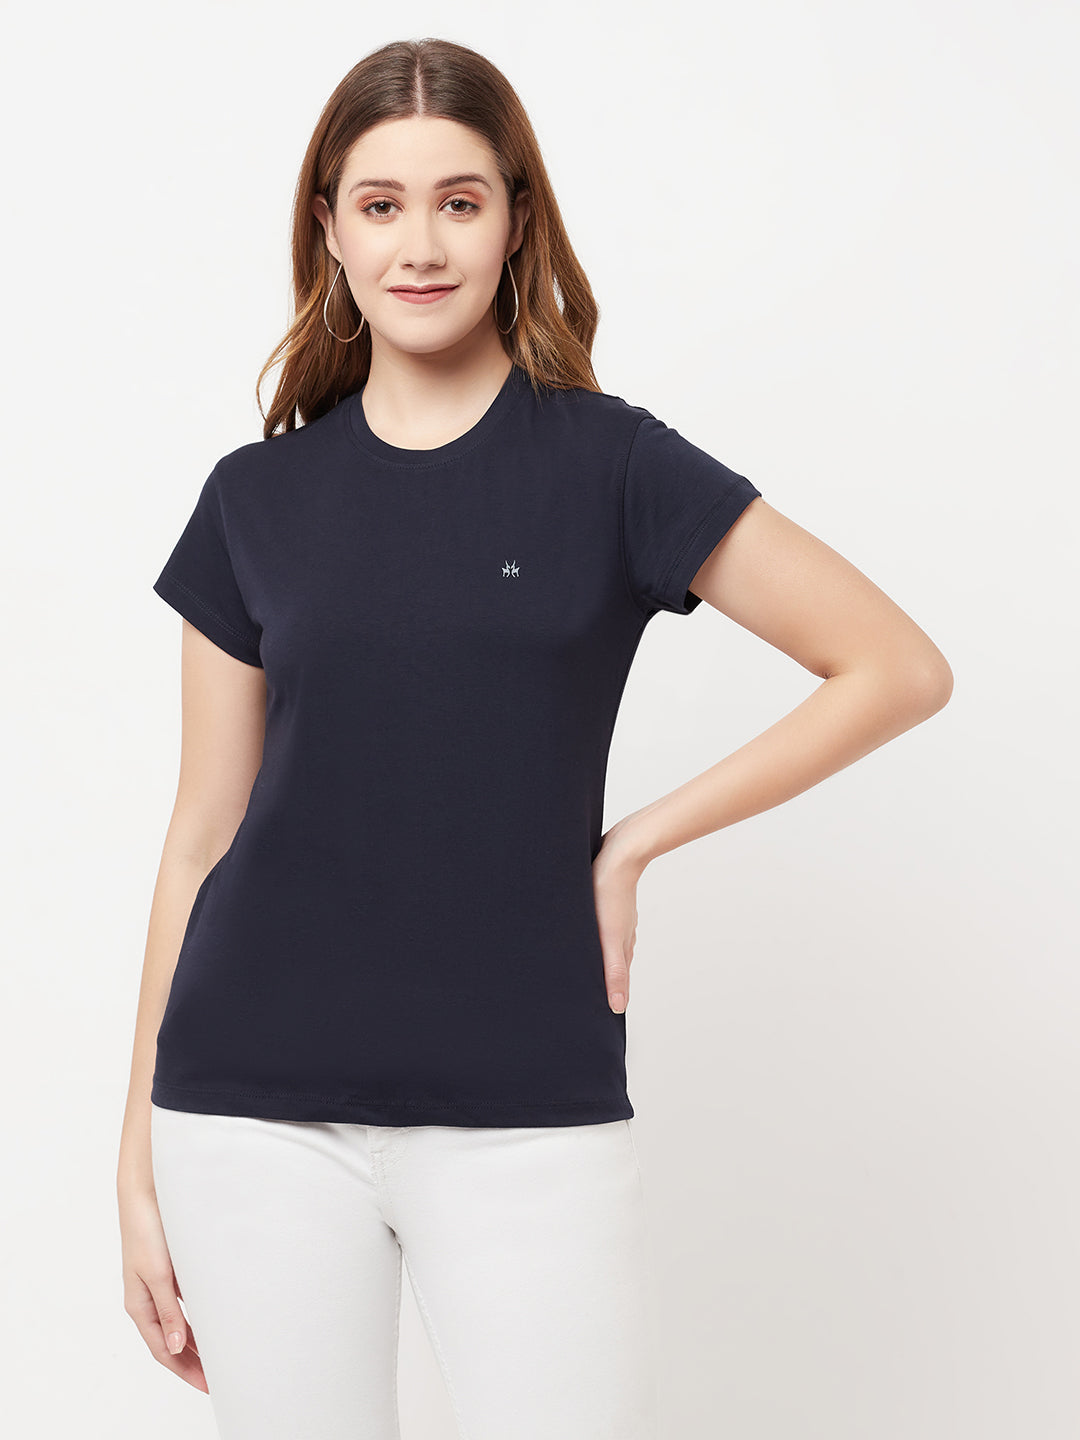 Navy Blue Round Neck T-Shirt - Women T-Shirts